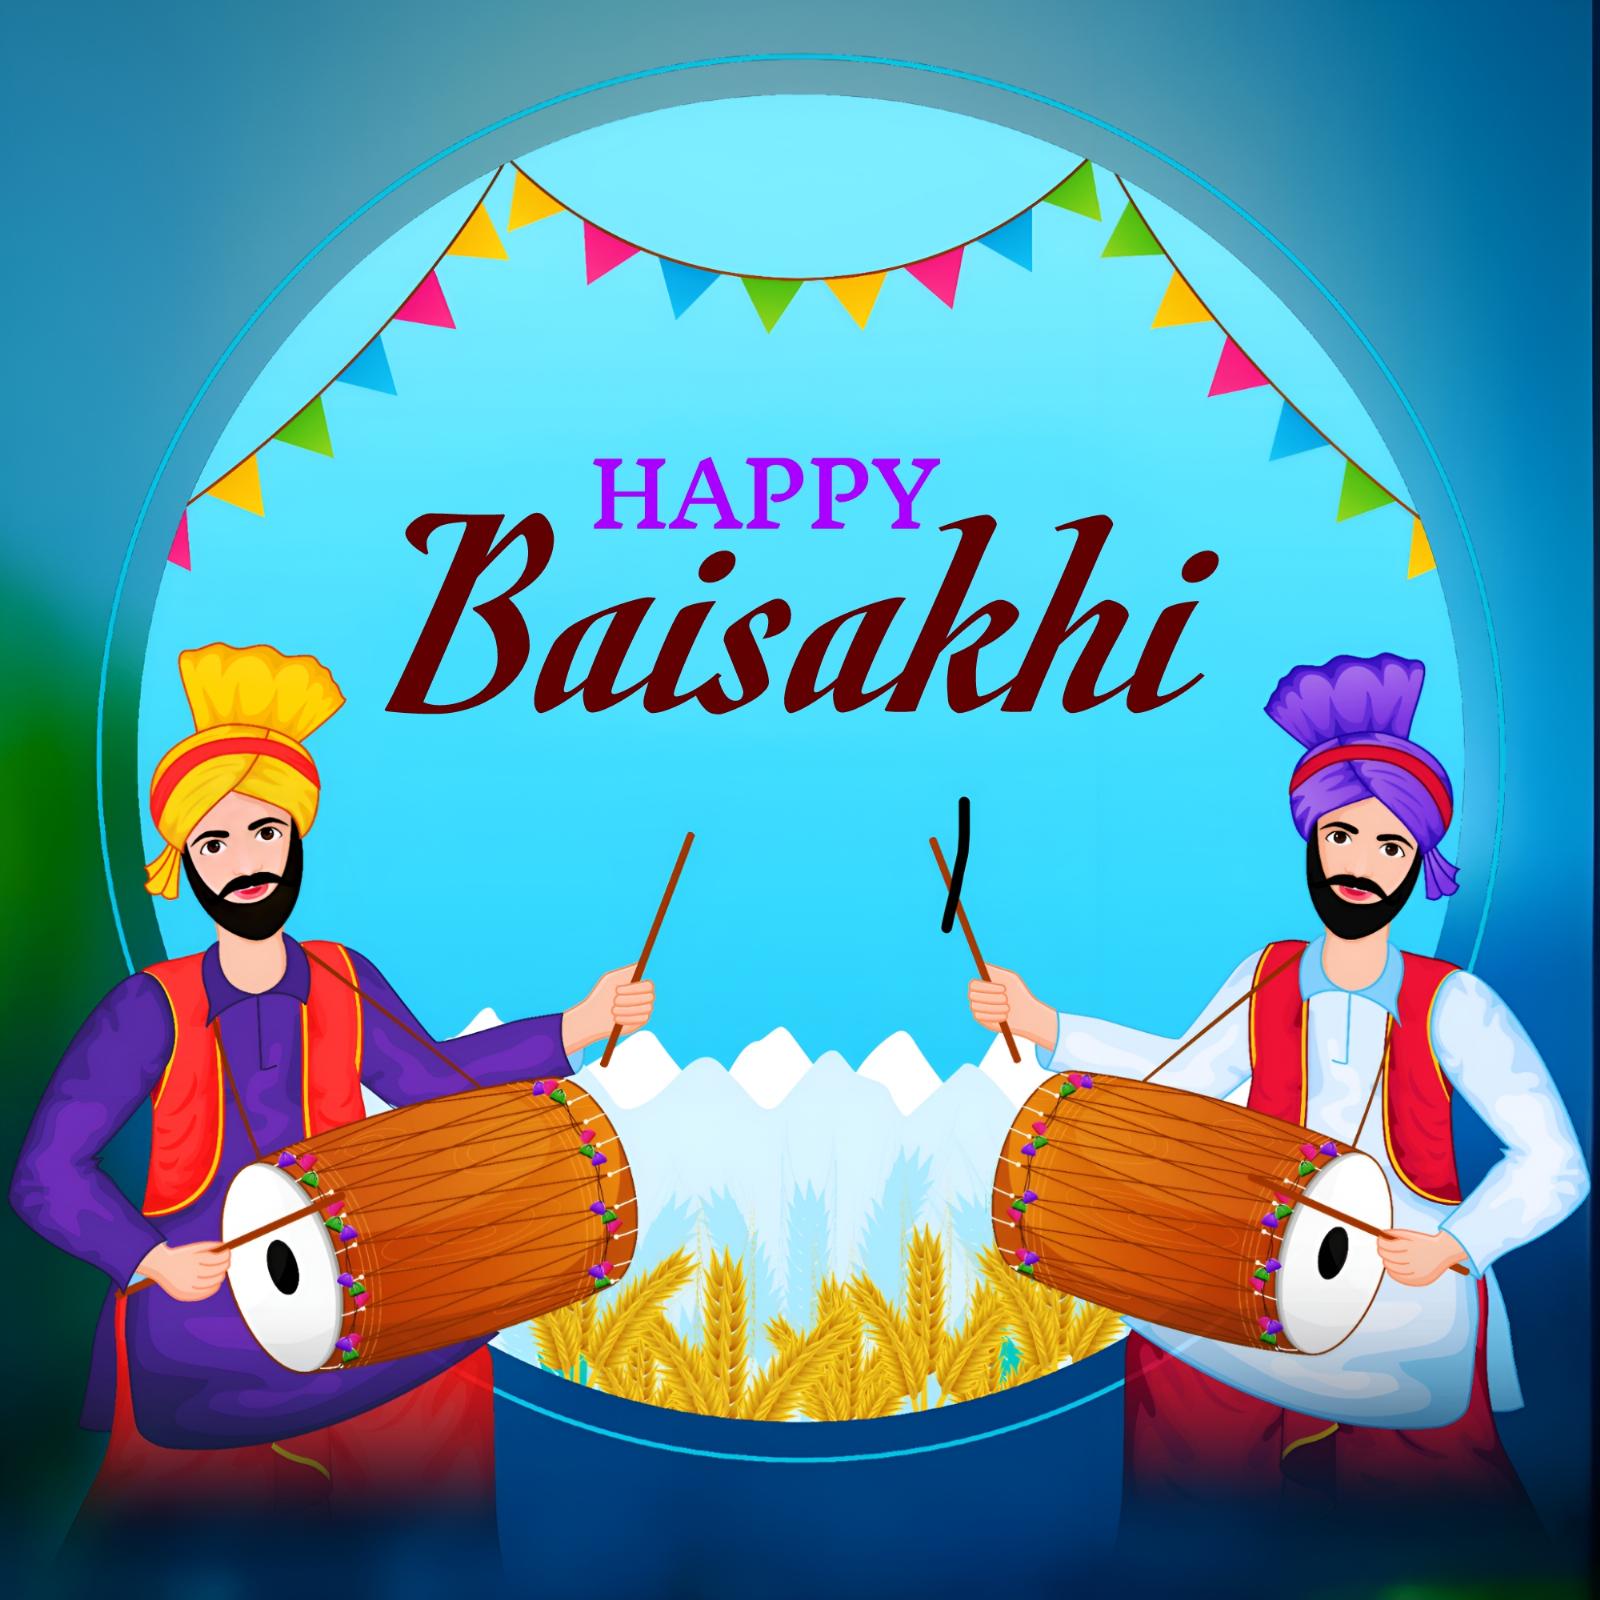 Happy Baisakhi Images For Whatsapp Dp